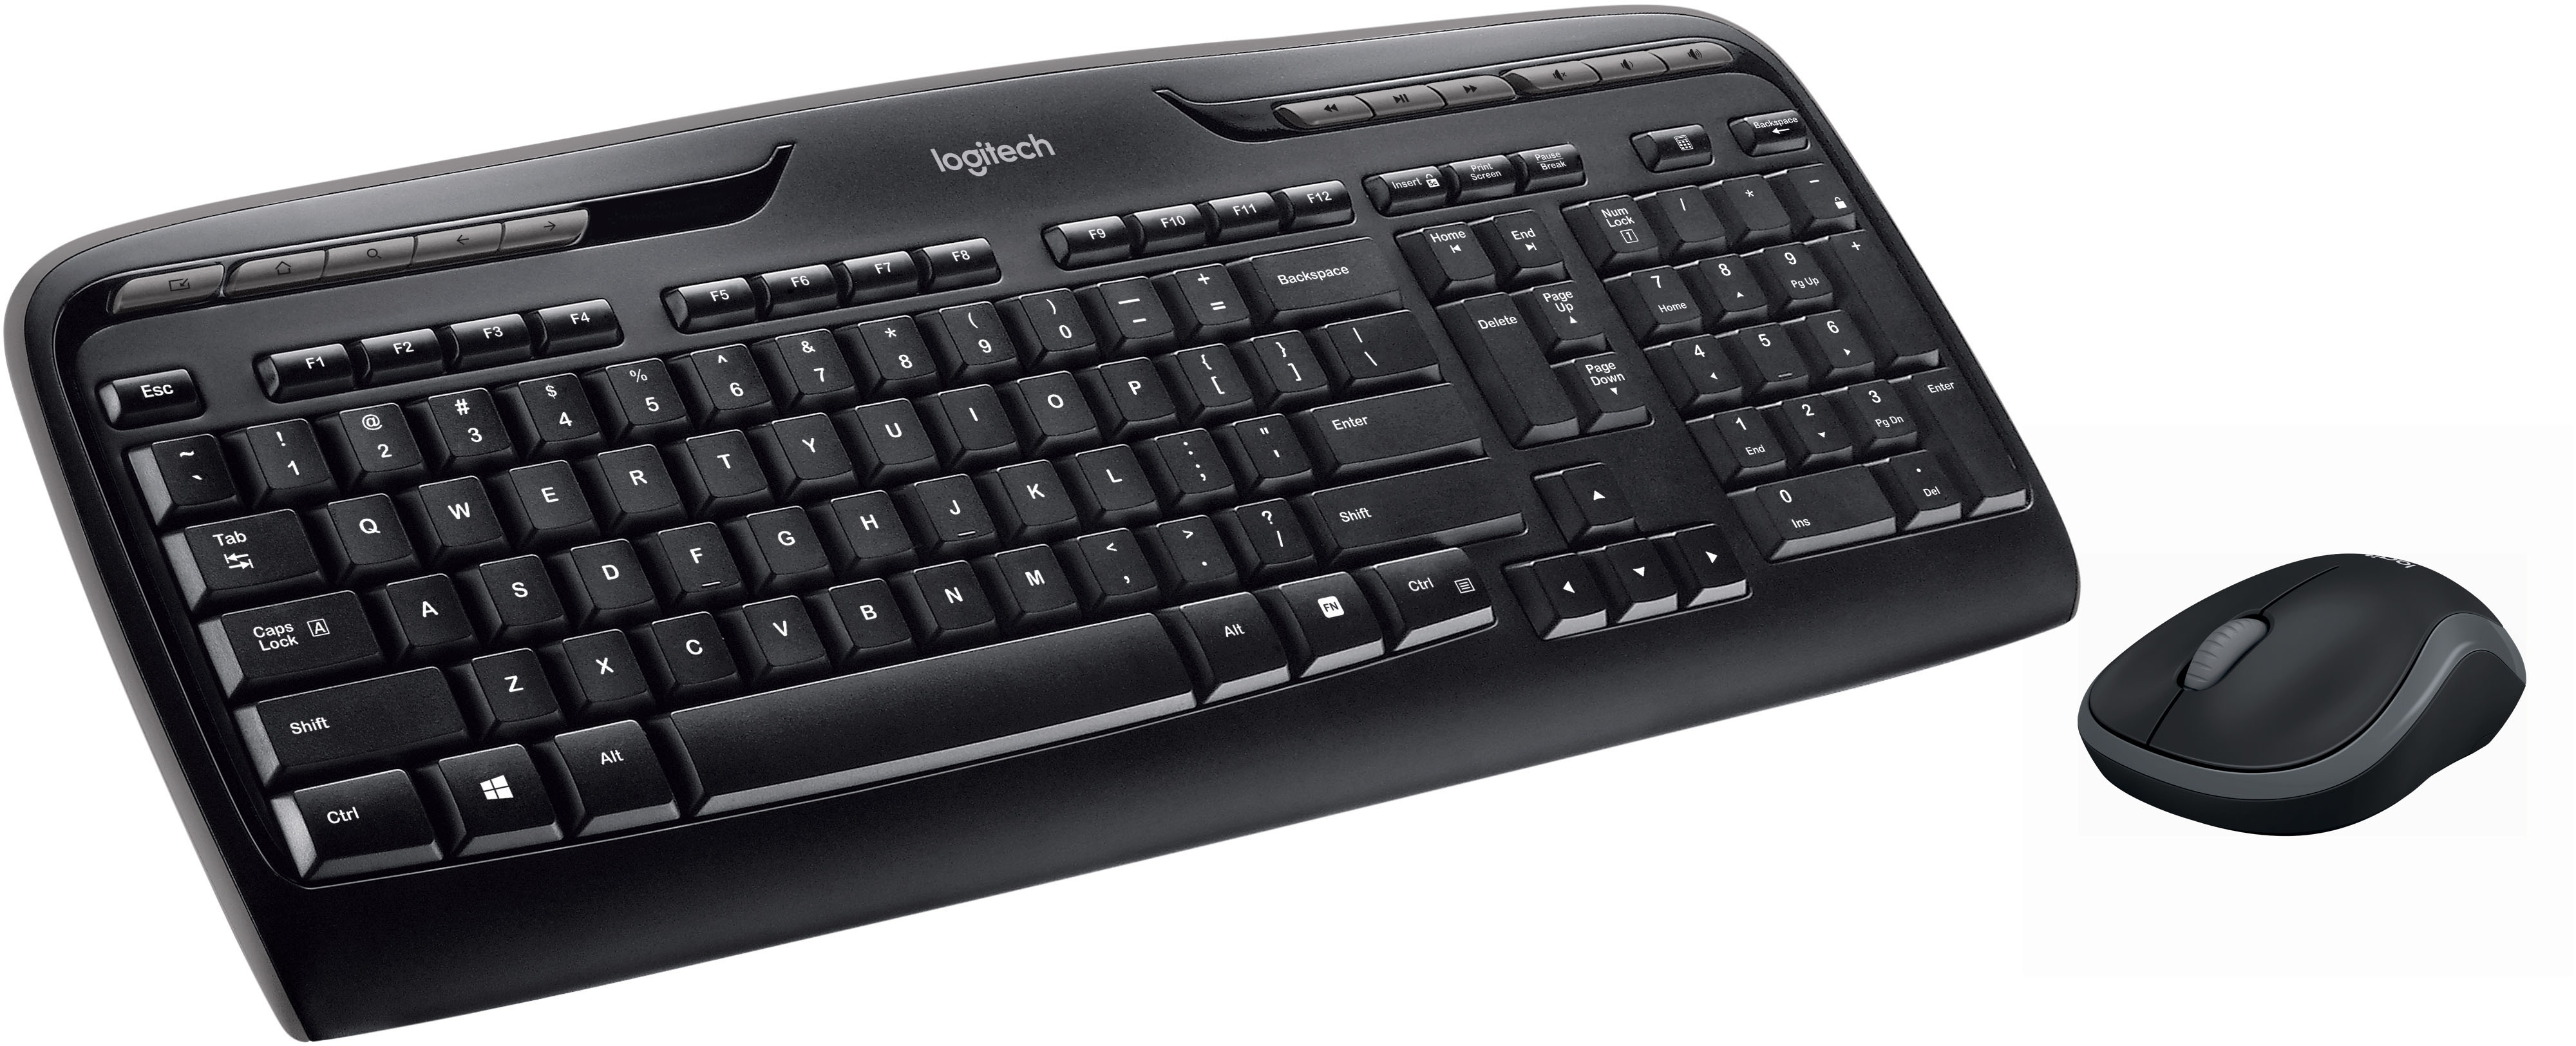 Logitech MK320 Full-size Keyboard and Mouse Bundle Black 920-002836 Buy